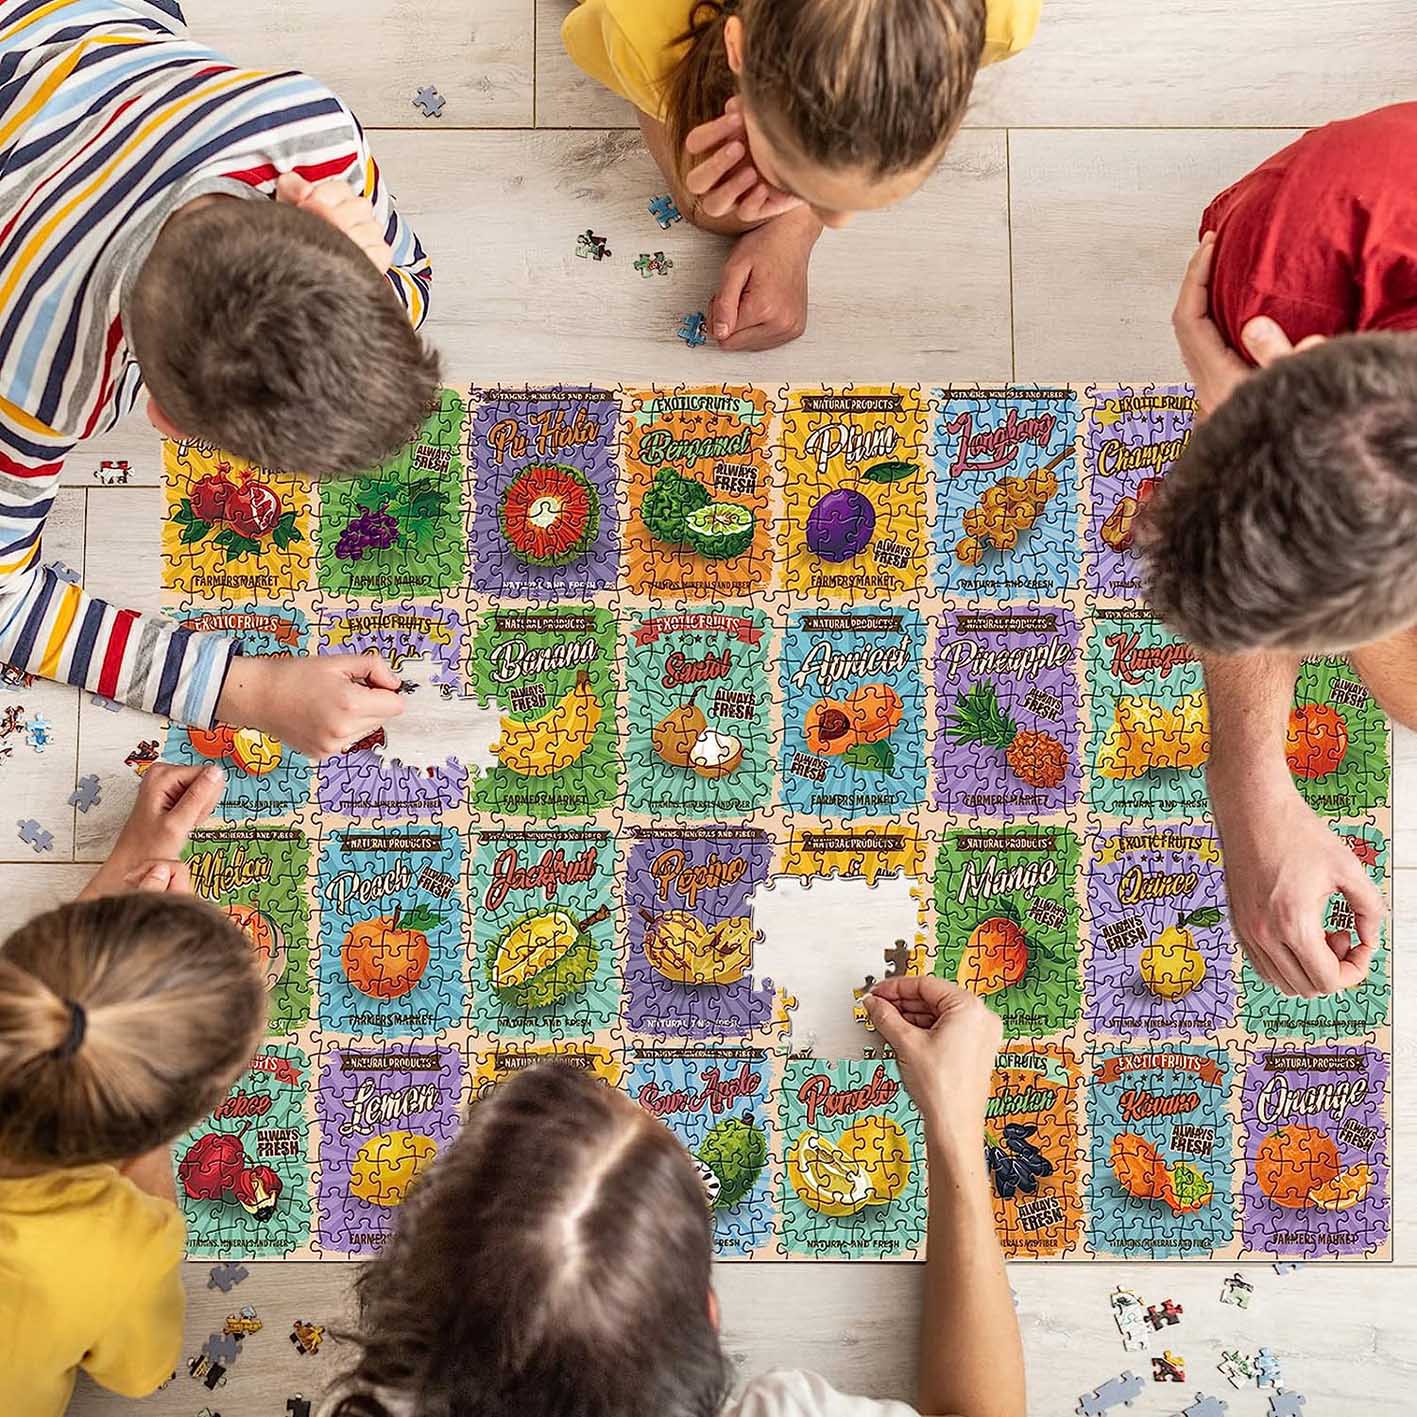 Pickforu® Vintage Fruit Jigsaw Puzzle 1000 Pieces